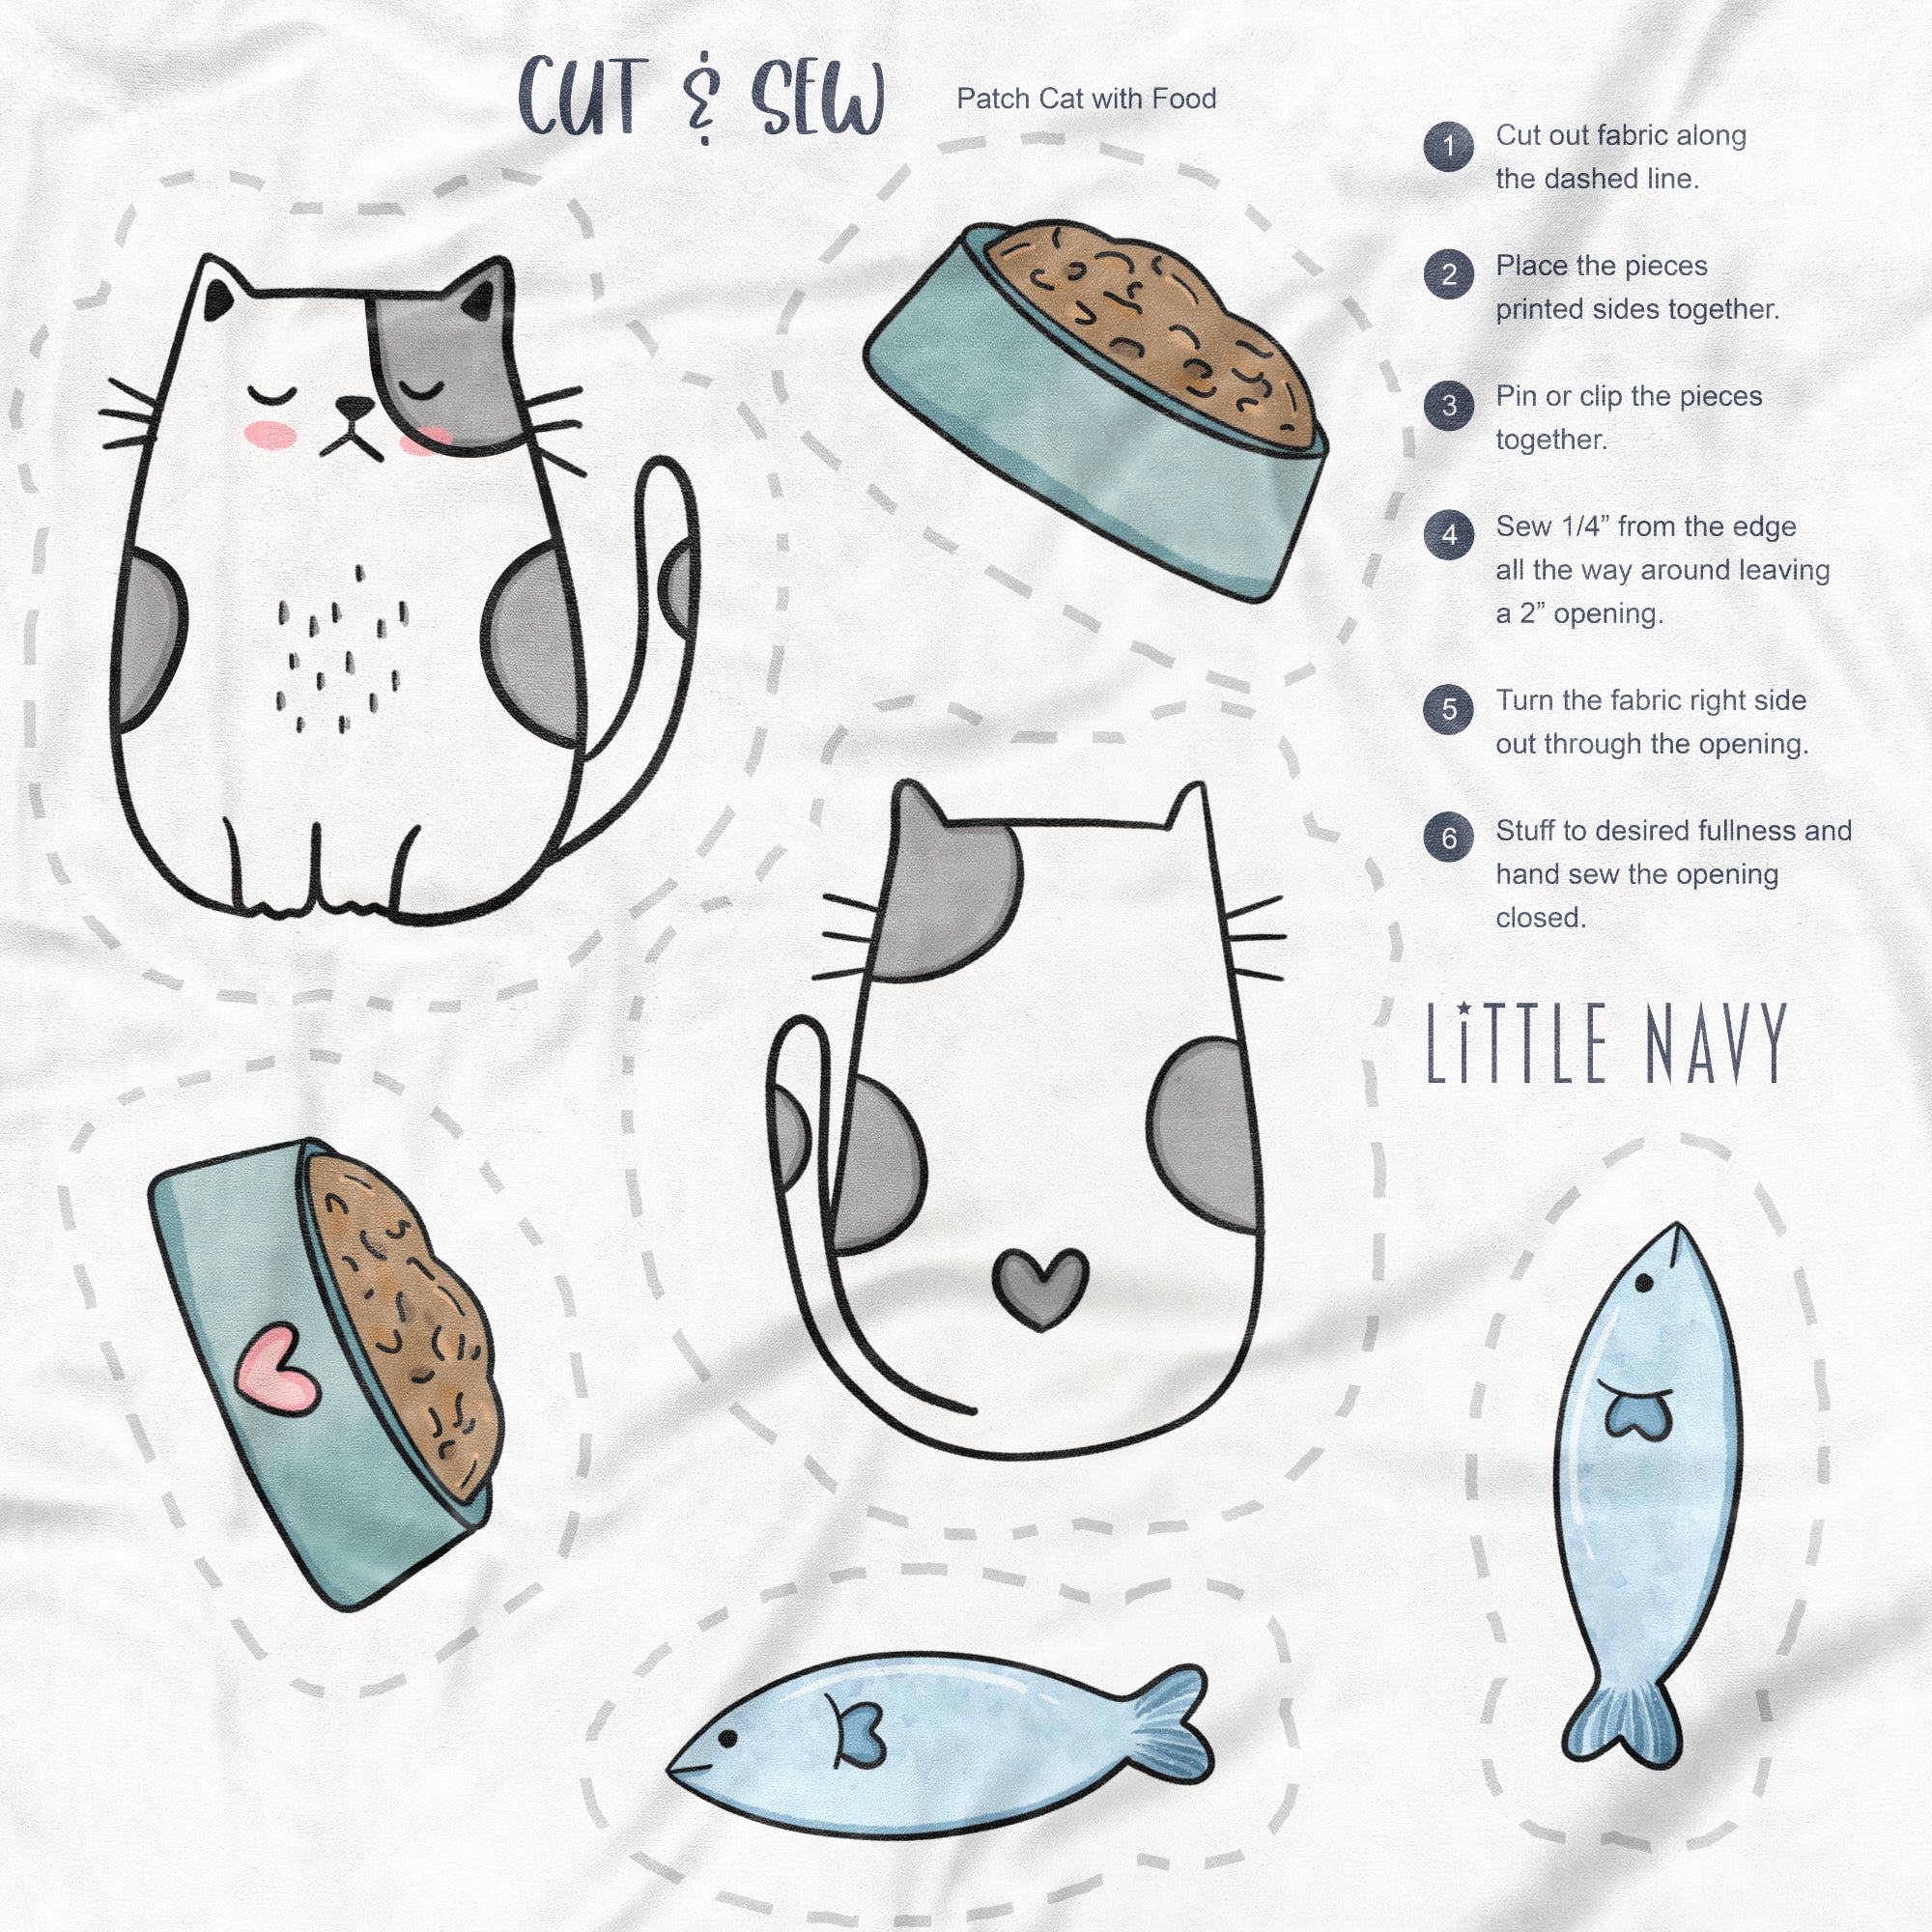 Cut & Sew (Fabric Panel) - Patch Cat & Food